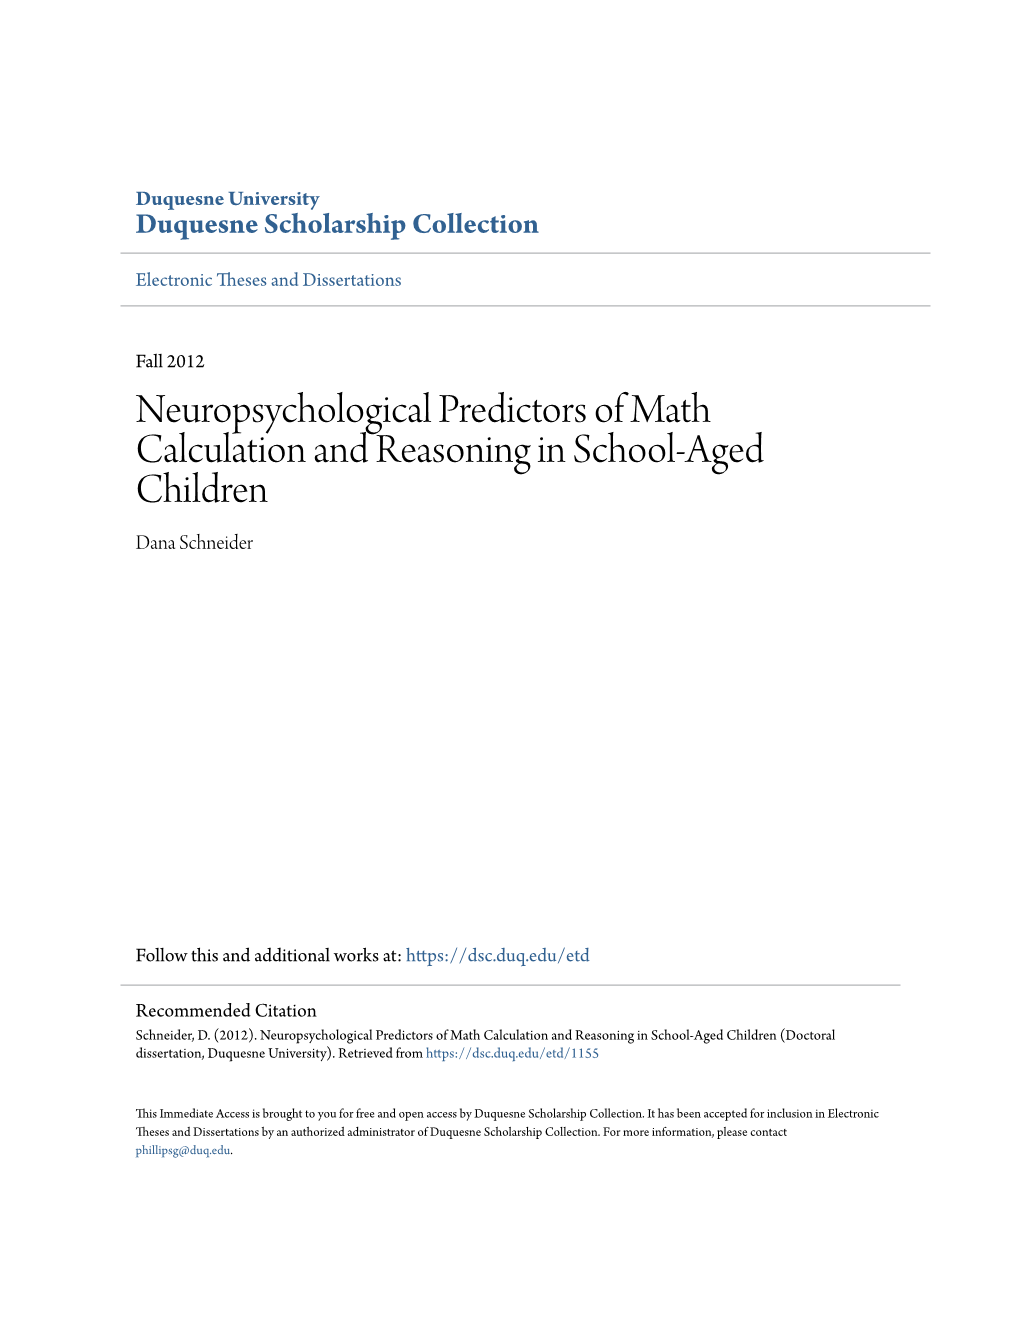 Neuropsychological Predictors of Math Calculation and Reasoning in School-Aged Children Dana Schneider